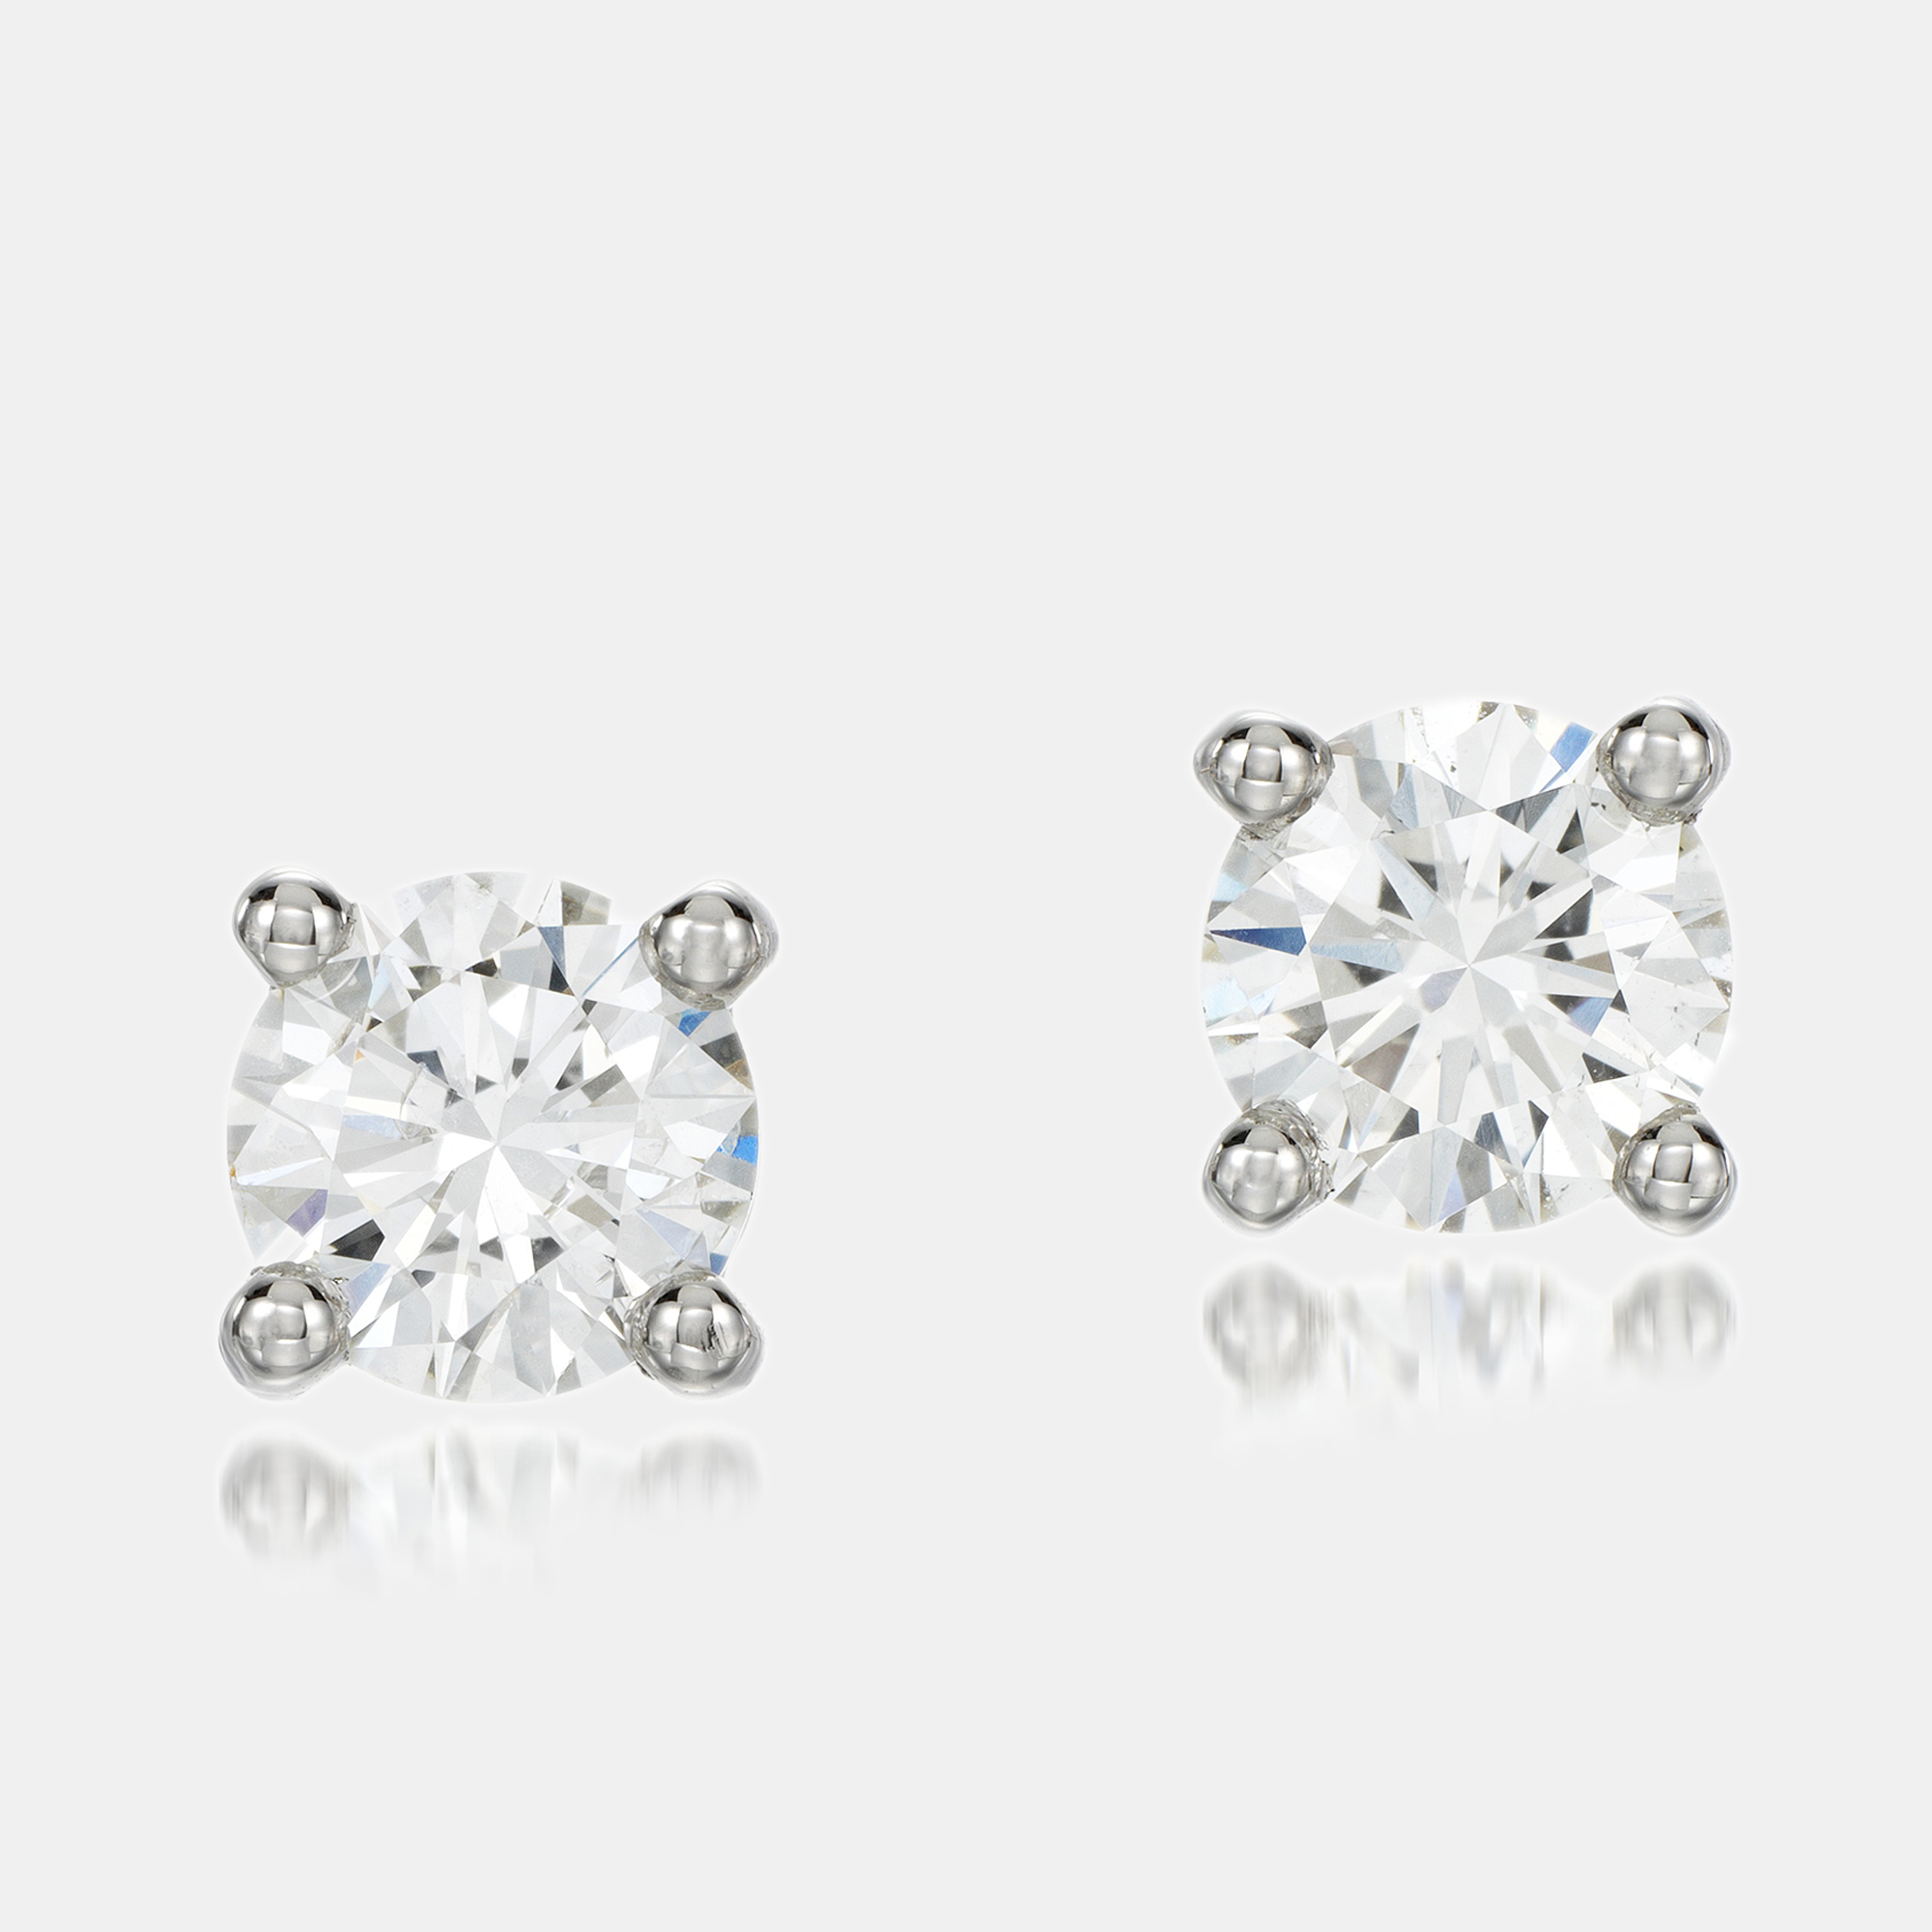 The diamond edit 18k white diamonds 1.60 ct. stud earrings